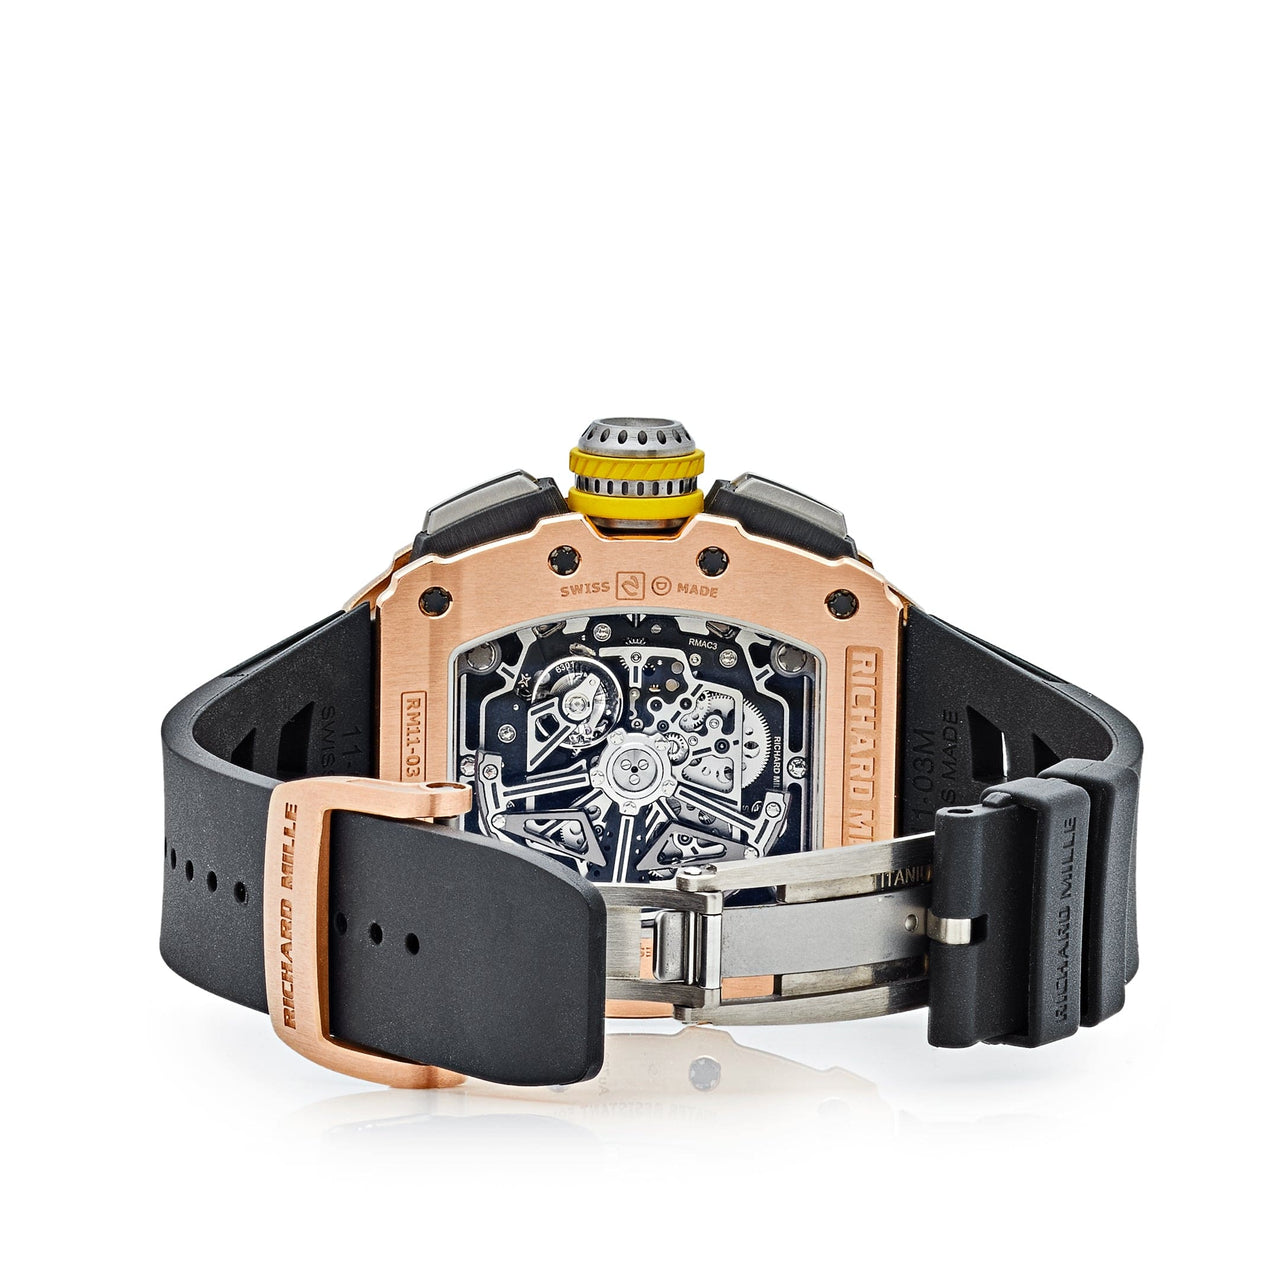 Luxury Watch Richard Mille Automatic Flyback Chronograph Rose Gold & Titanium RM11-03 Wrist Aficionado